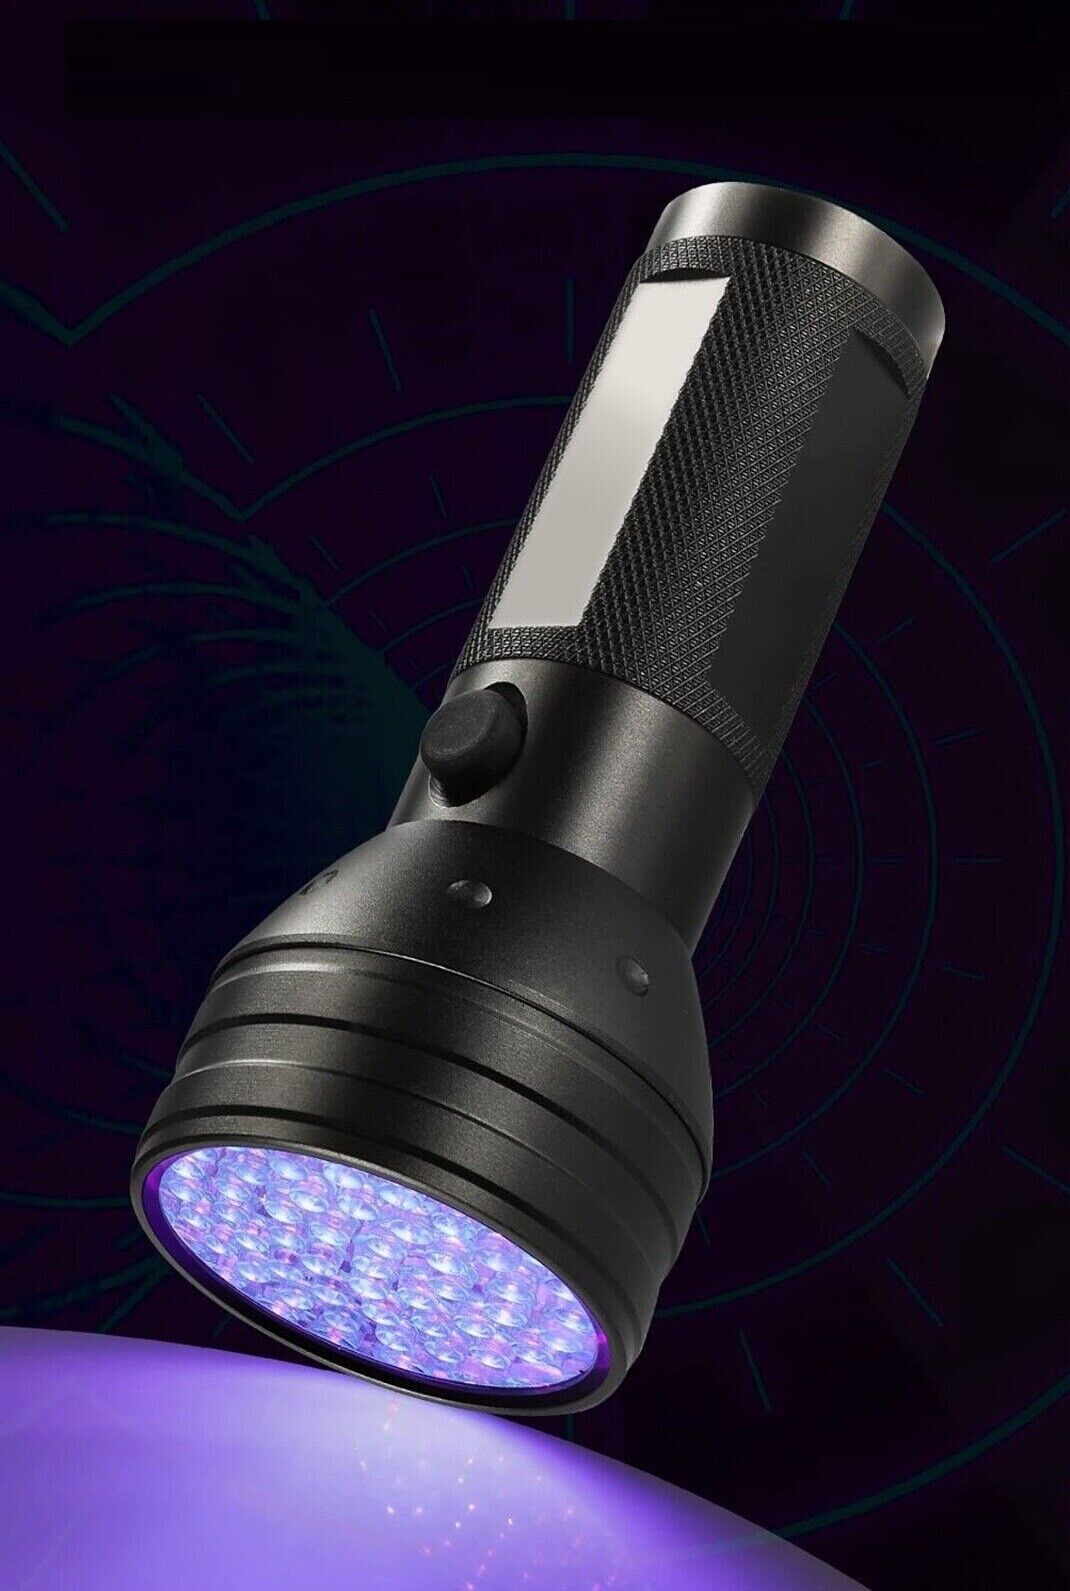 Linterna Ultravioleta 100 LED Lampara de Luz Negra Profesional para  Inspección